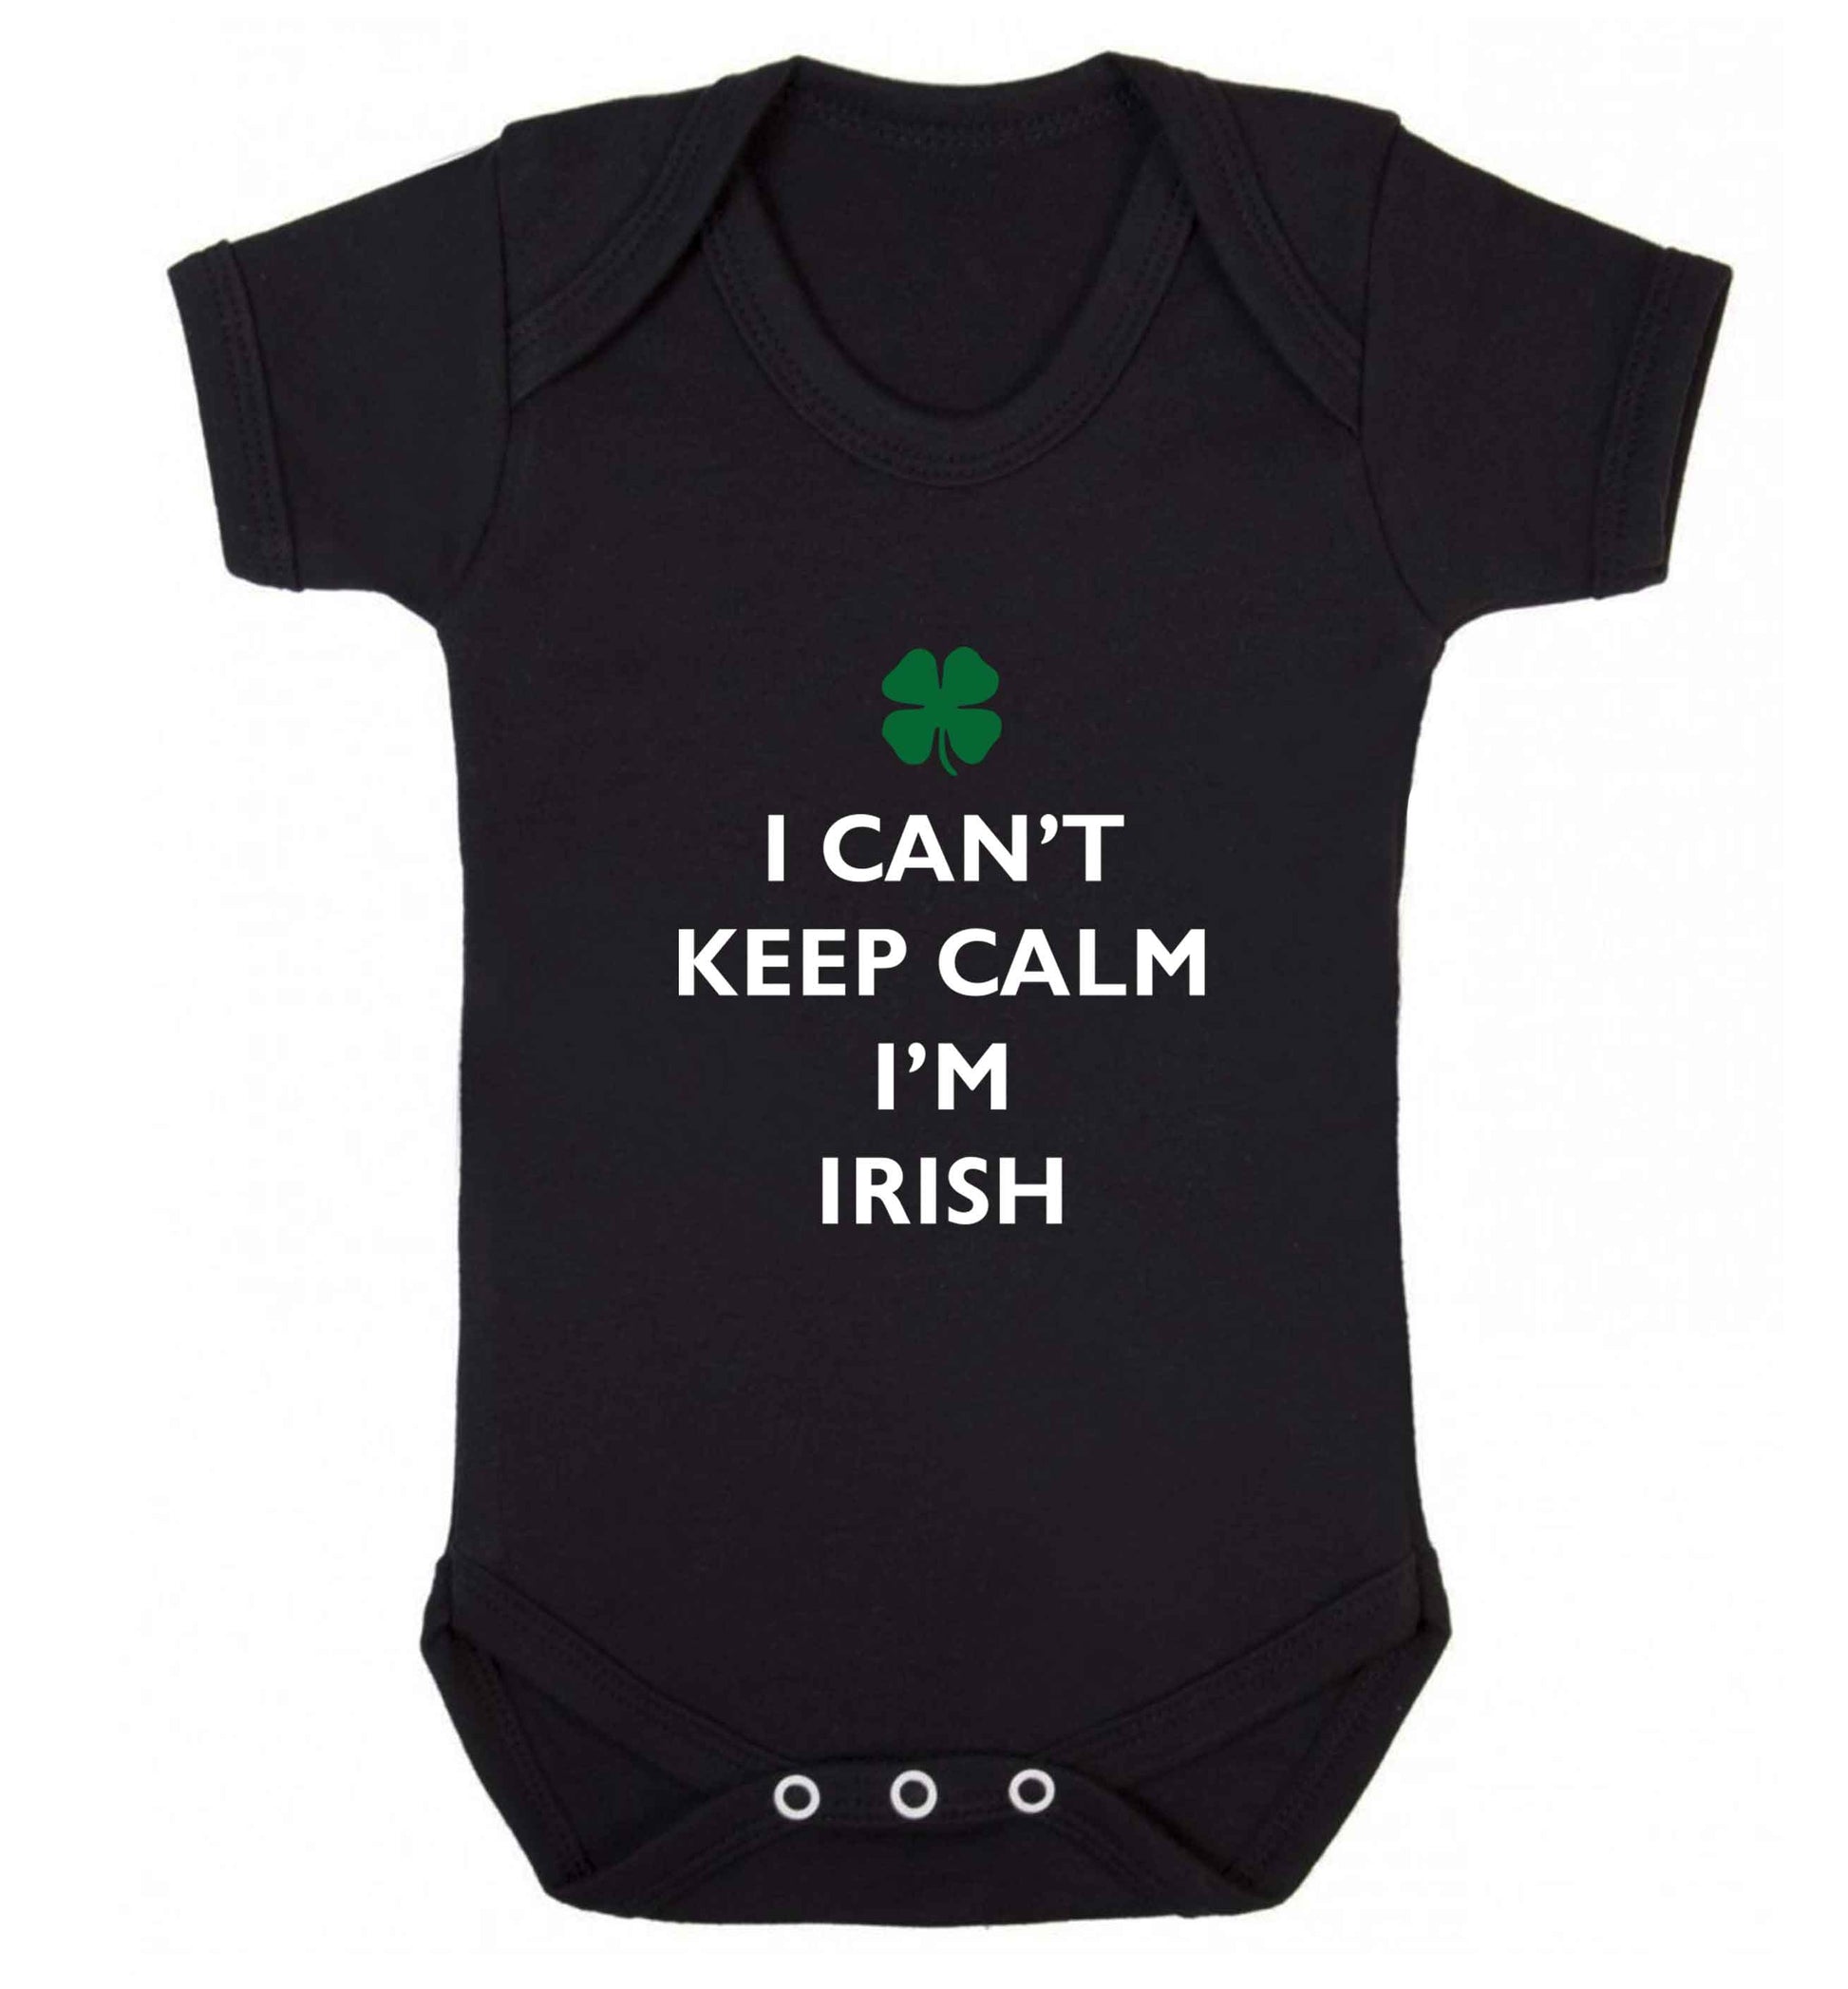 I can't keep calm I'm Irish baby vest black 18-24 months